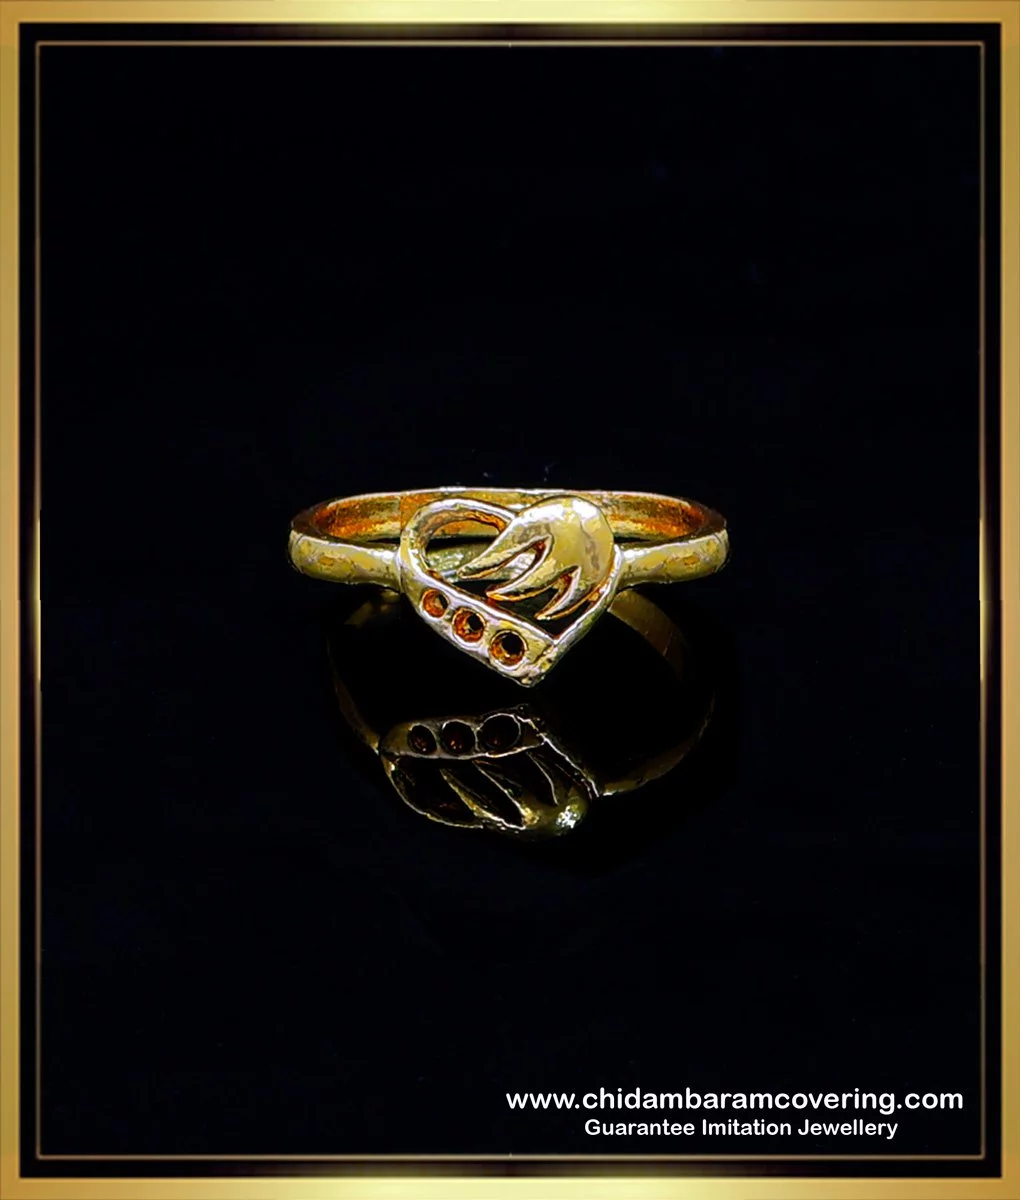 GWR013 - 22K Women's Gold Ring